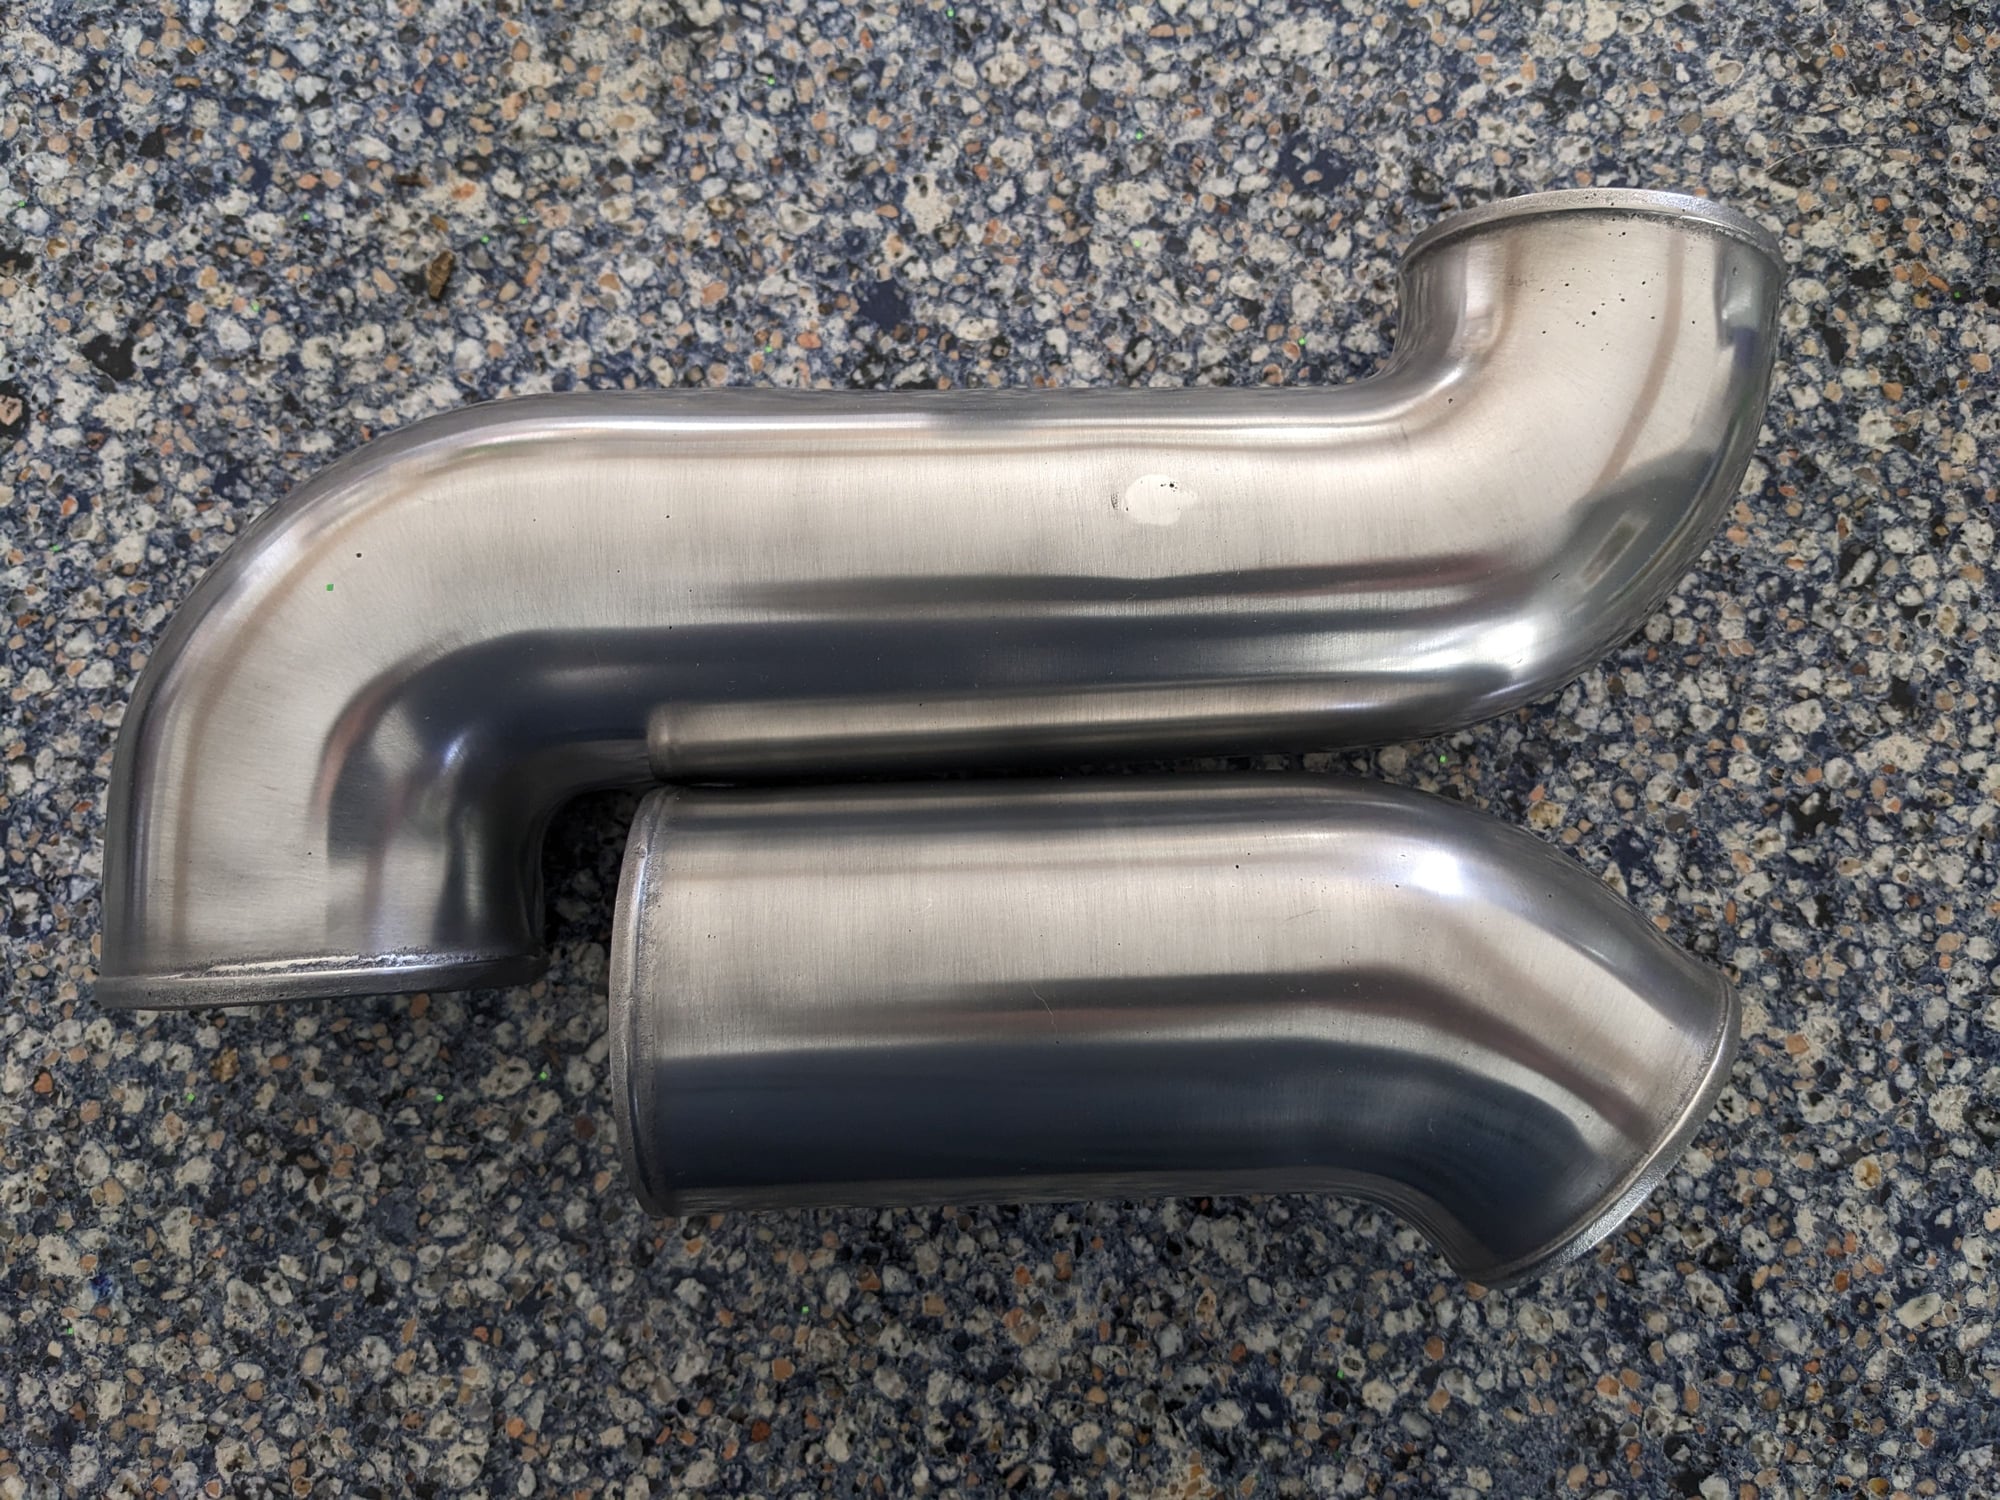 Engine - Intake/Fuel - Polished aluminum hks intercooler piping. - Used - 1993 to 2002 Mazda RX-7 - Blythewood, SC 29016, United States